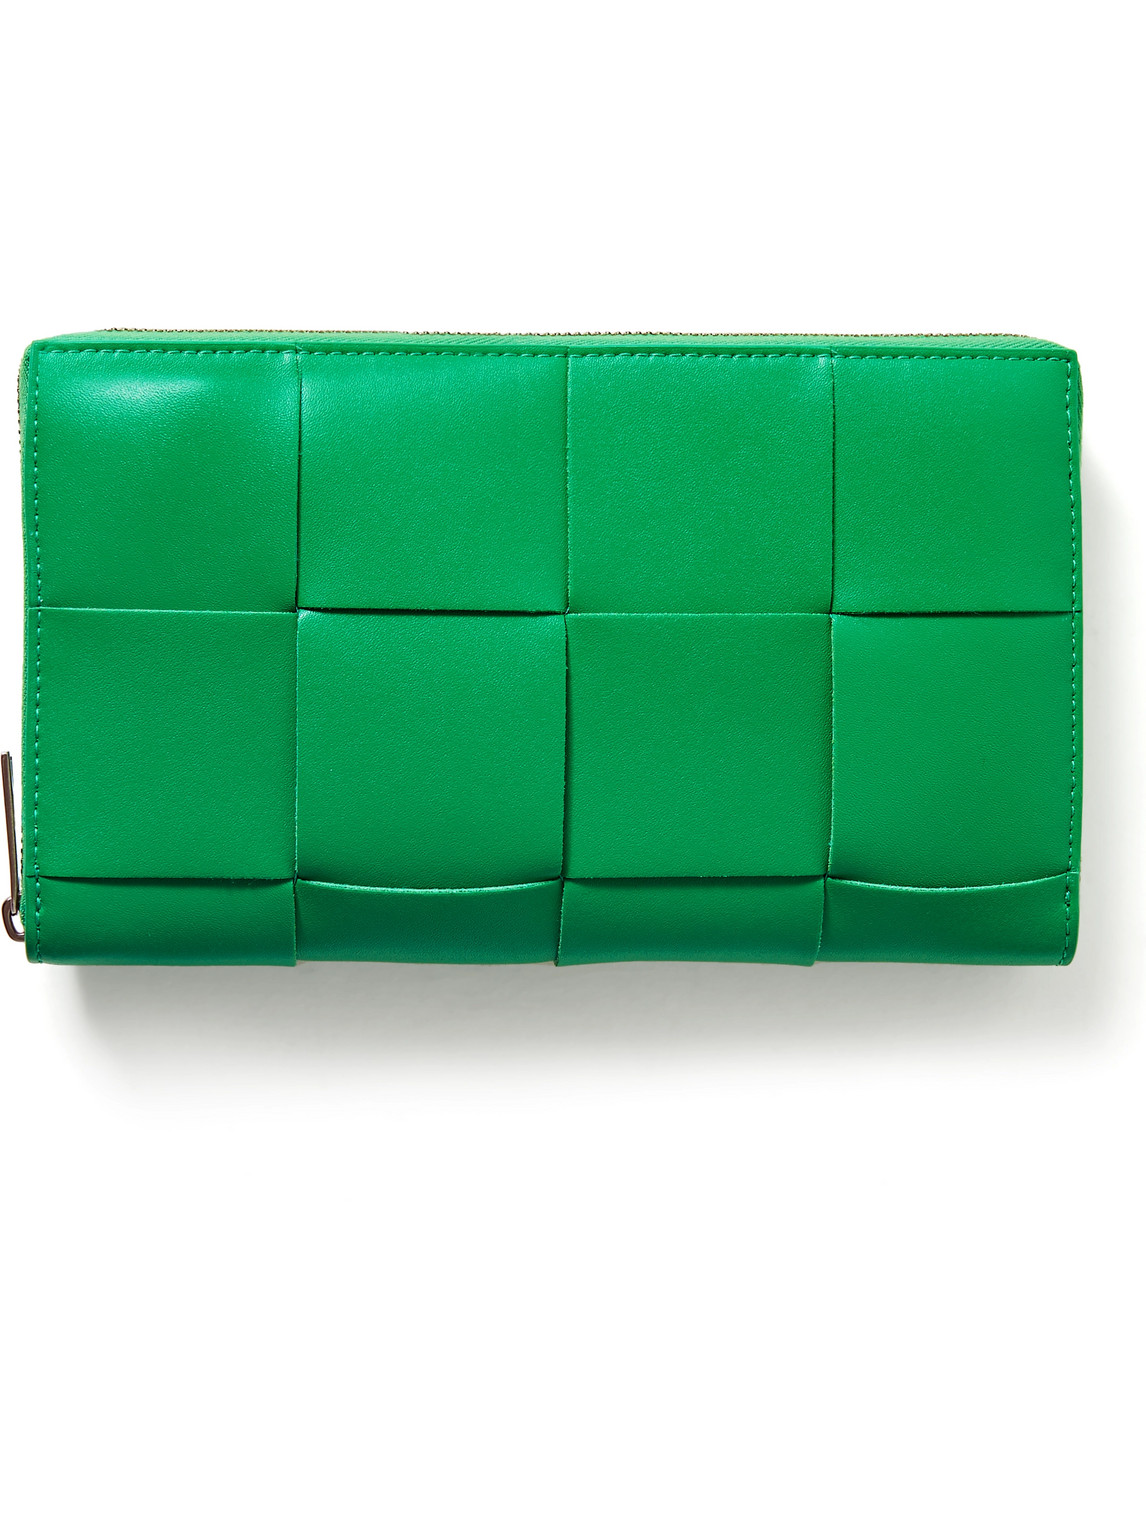 Bottega Veneta Intrecciato Leather Zip-around Wallet In Green